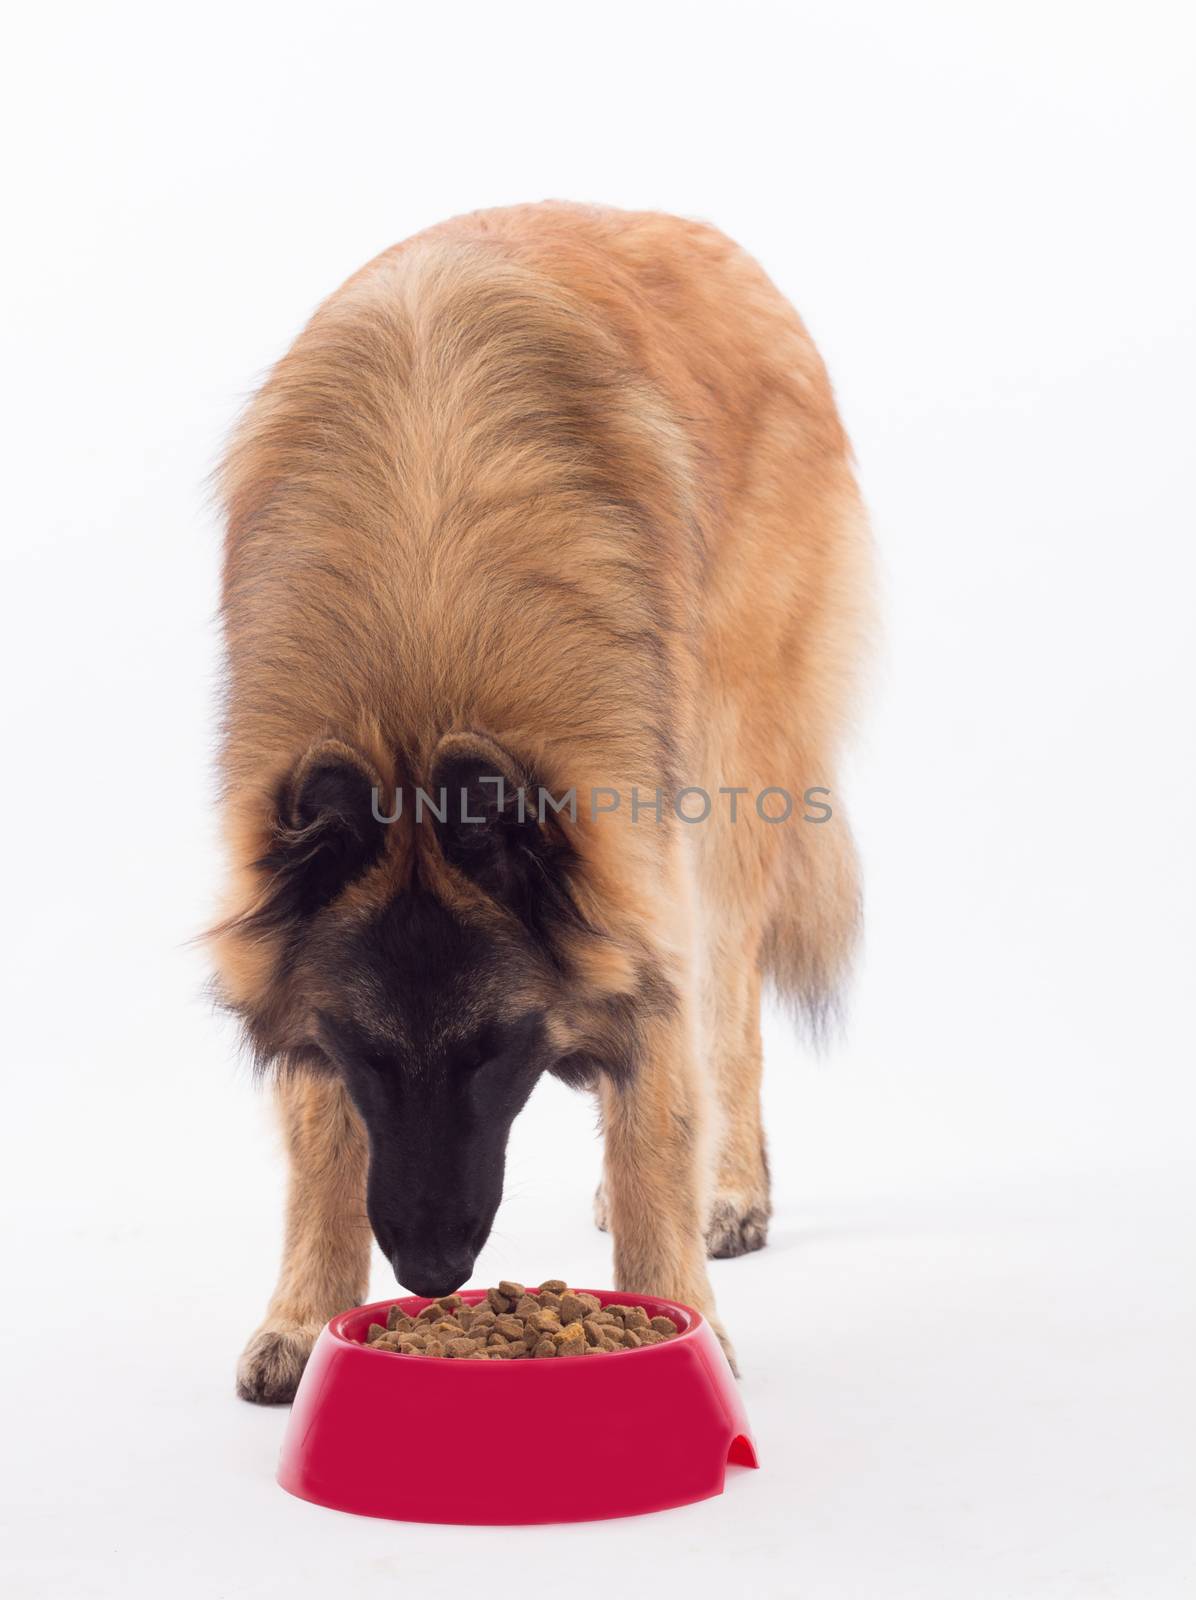 Tervuren dog, eating dog food in bowl, white studio background by avanheertum